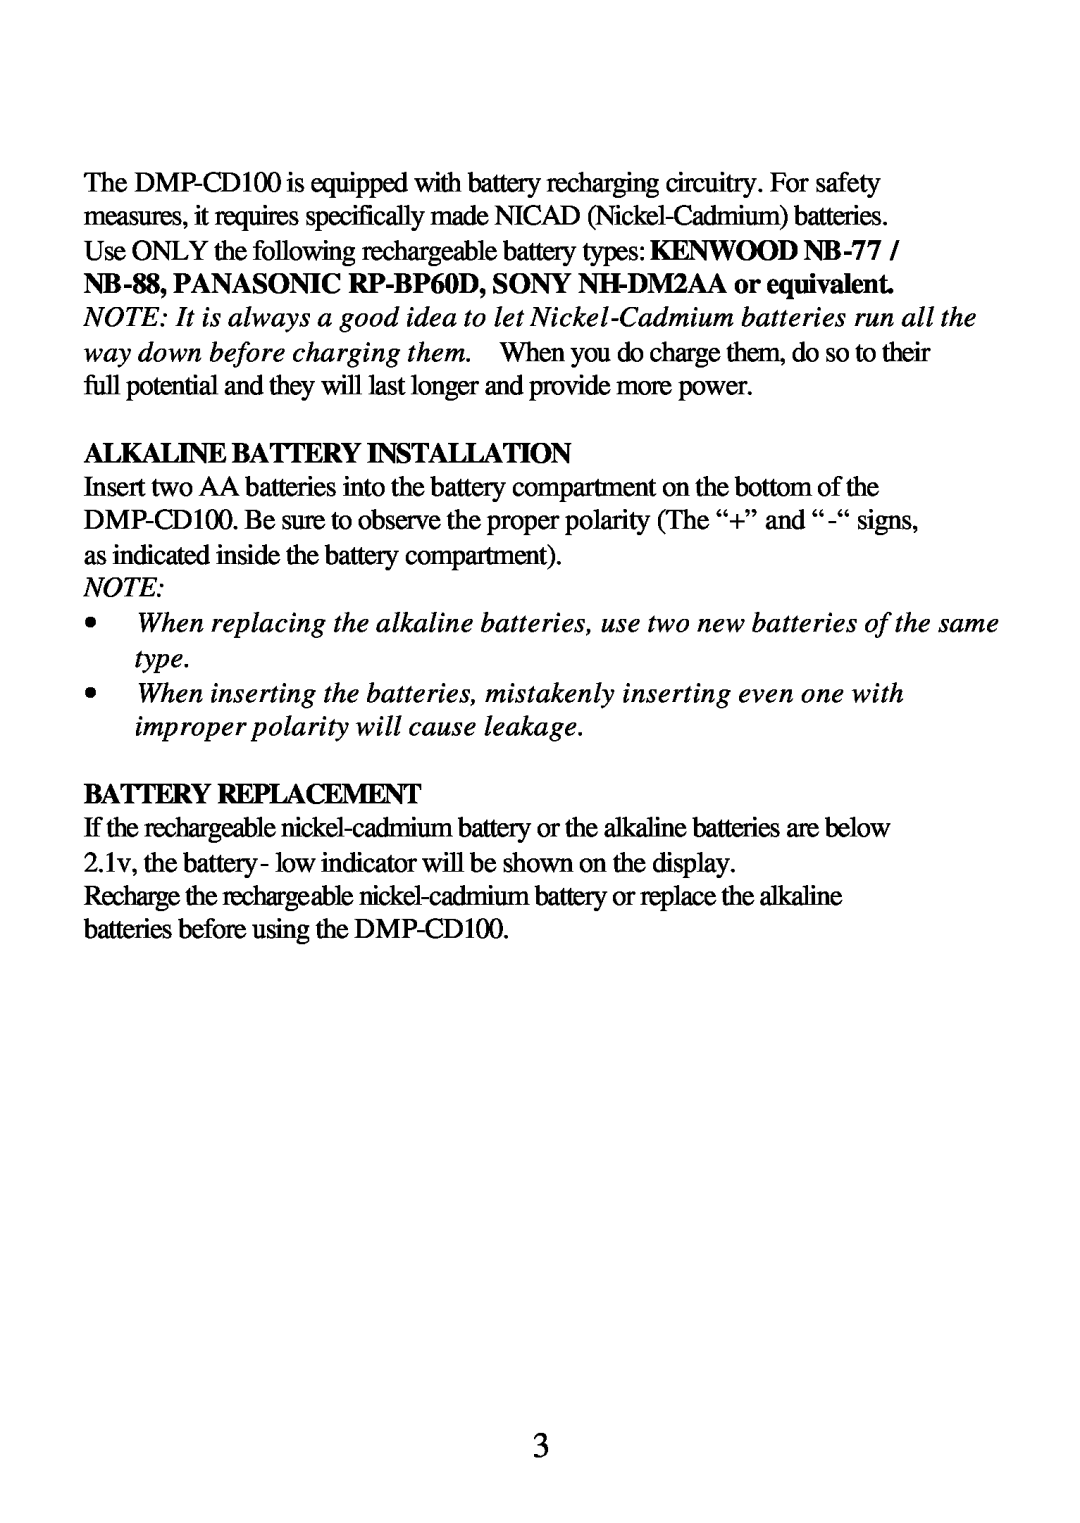 D-Link DMP-CD100 user manual Alkaline Battery Installation, Battery Replacement 